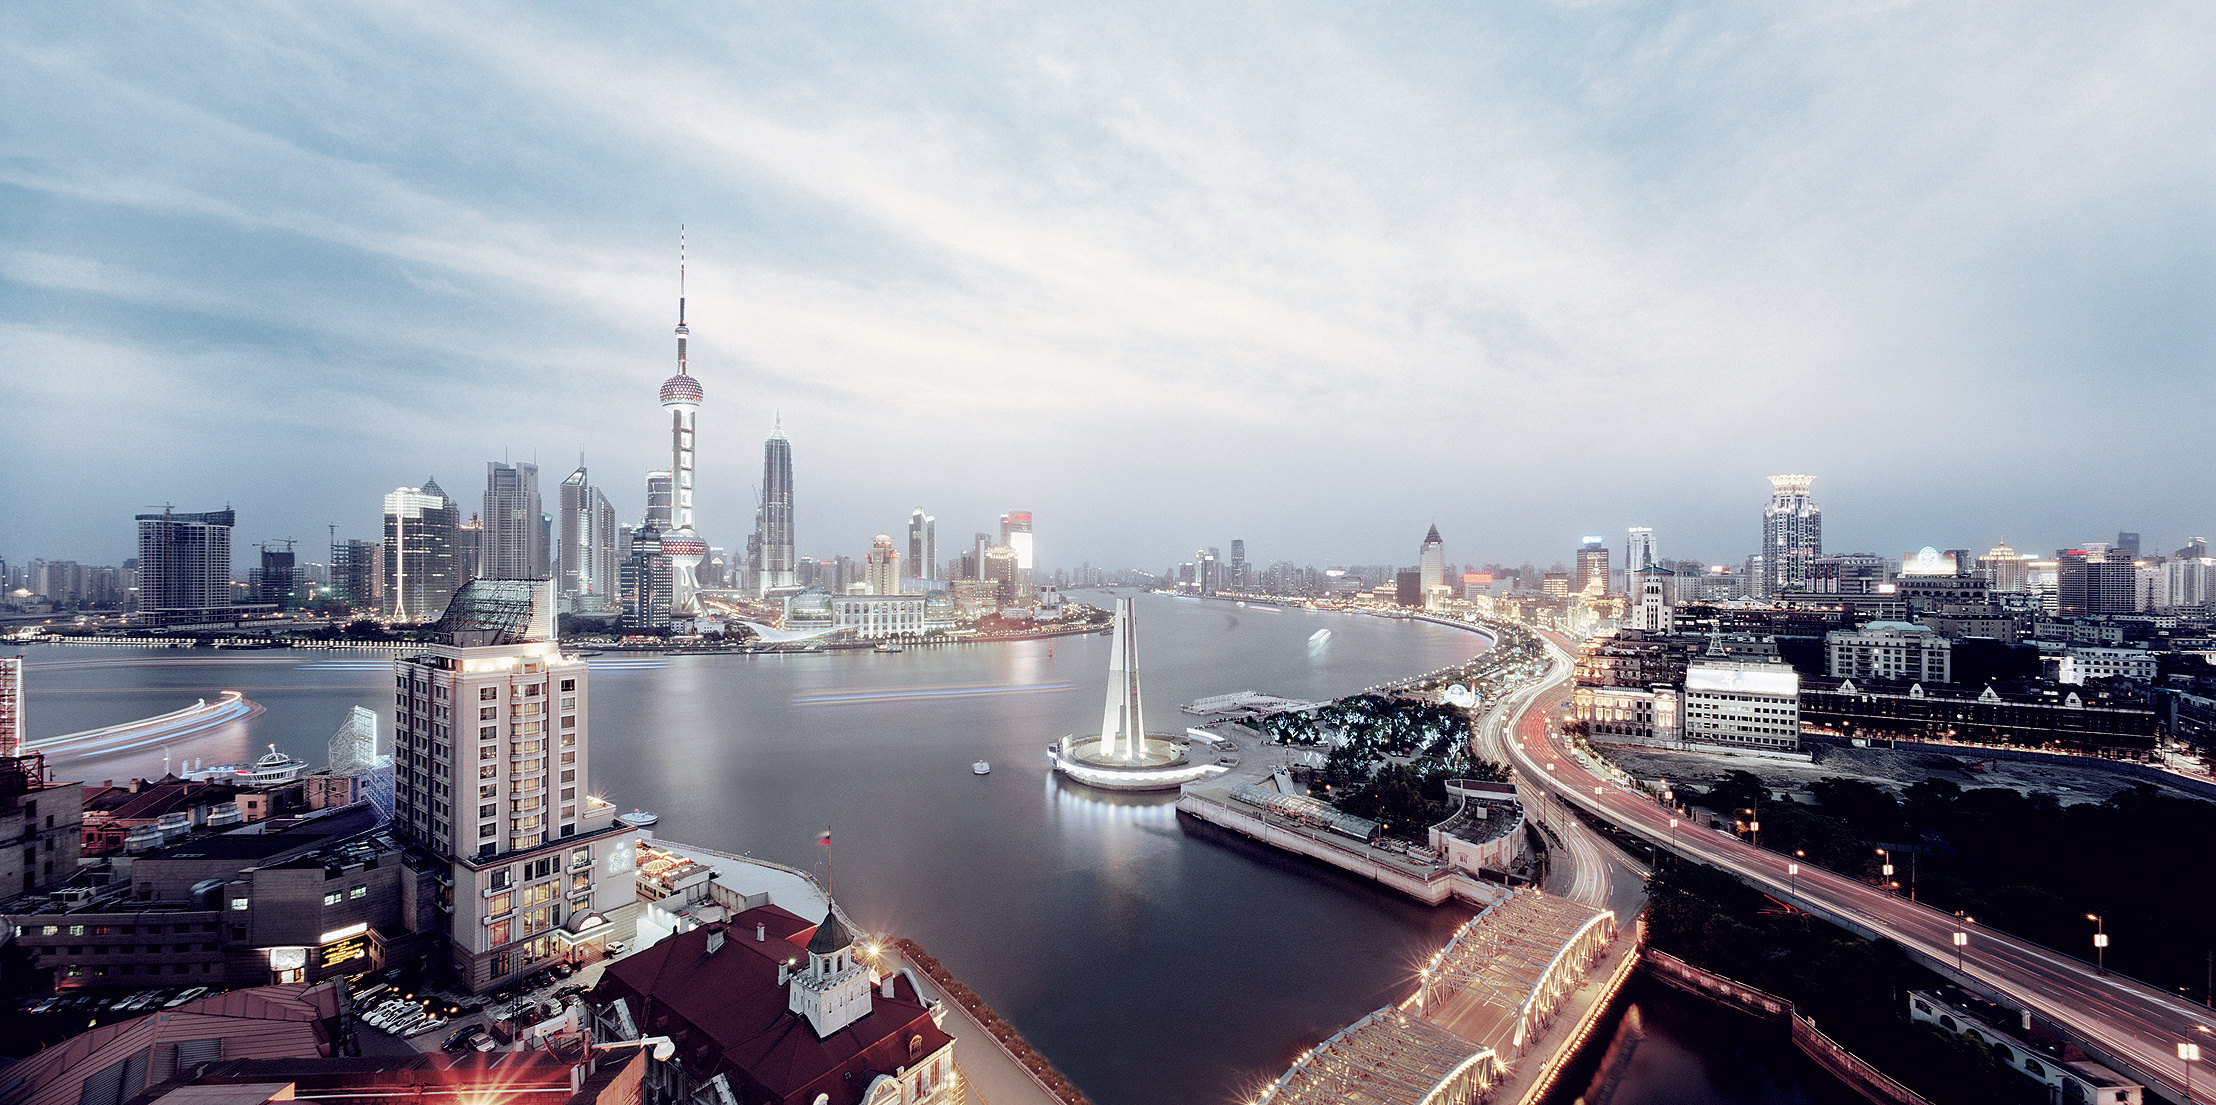 Shanghai skyline at night, showcasing the mesmerizing skyline of China's bustling city.